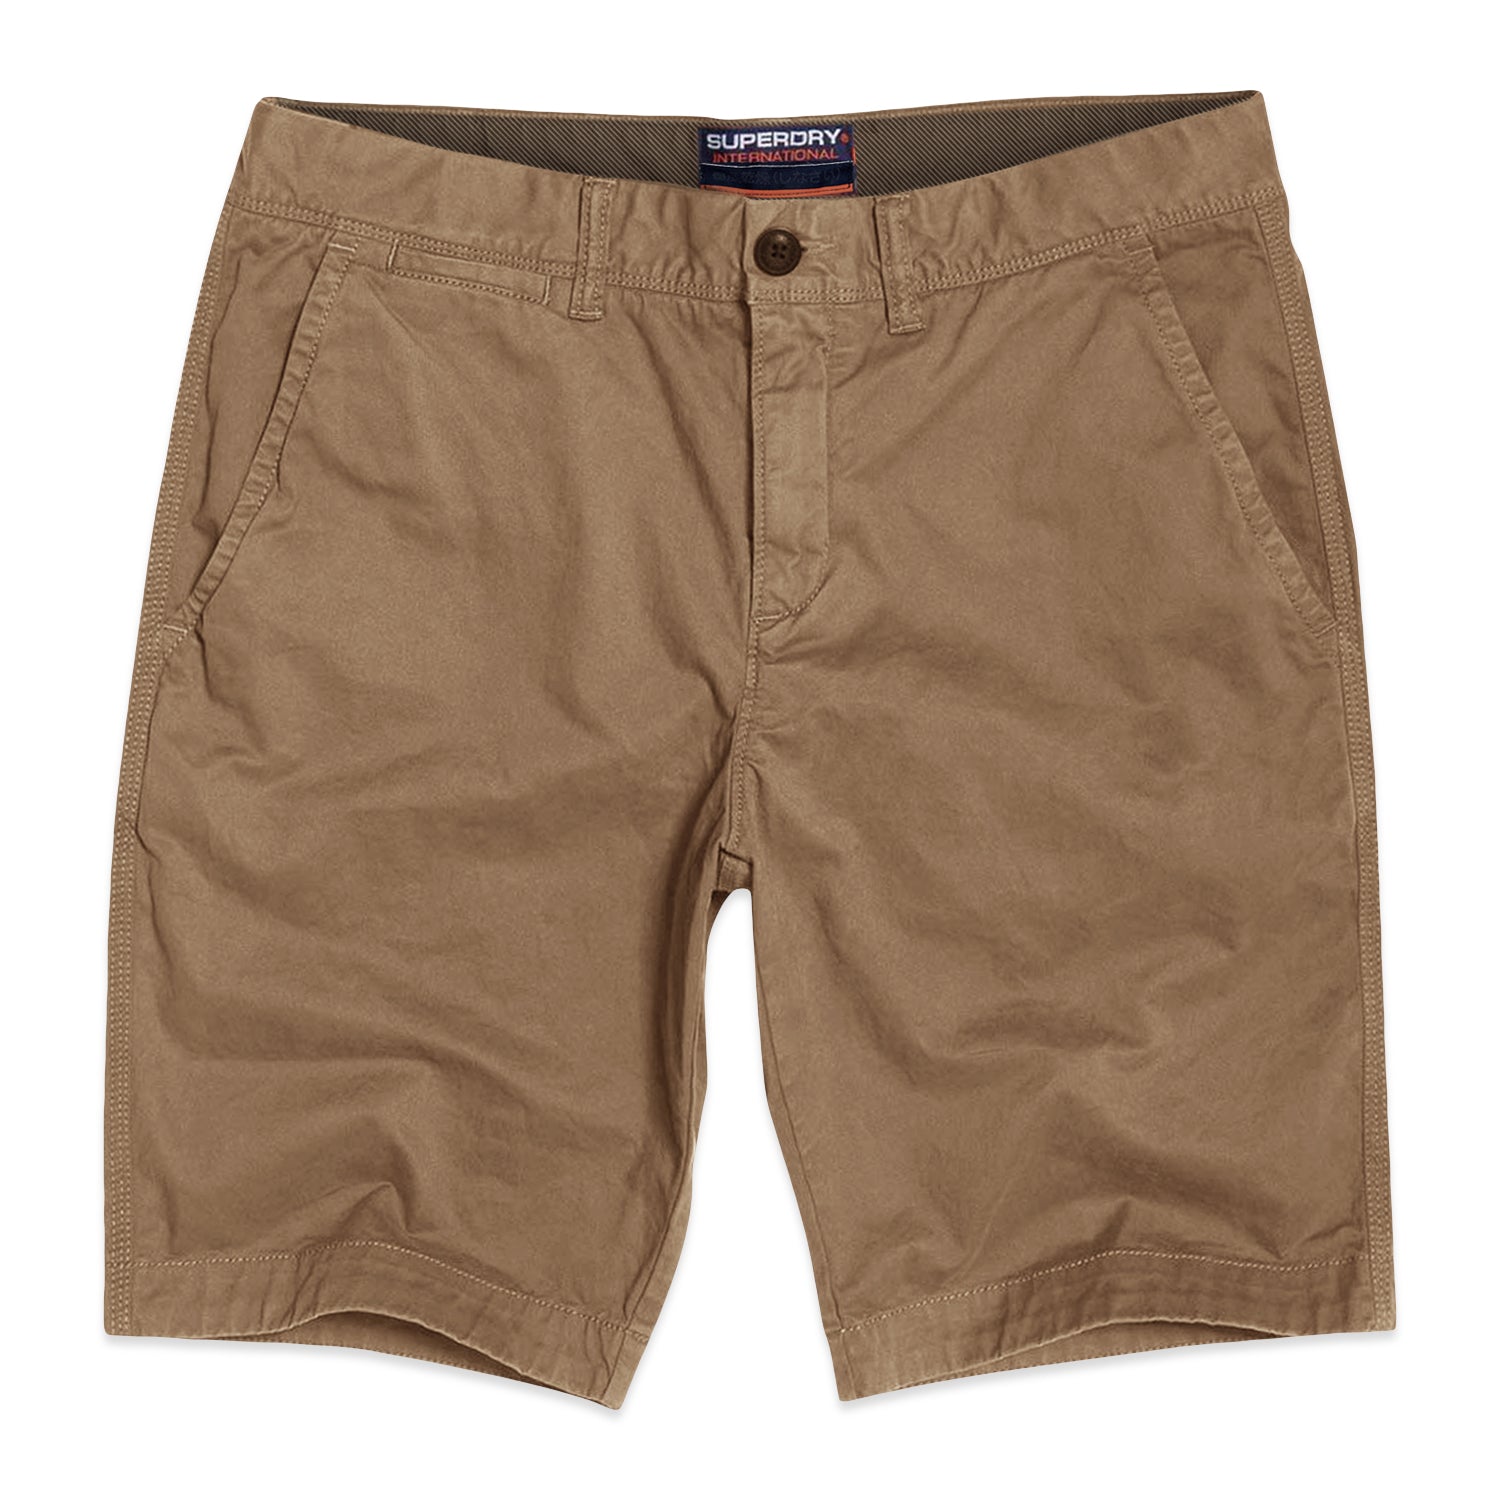 Superdry International Chino Shorts - Desert Beige